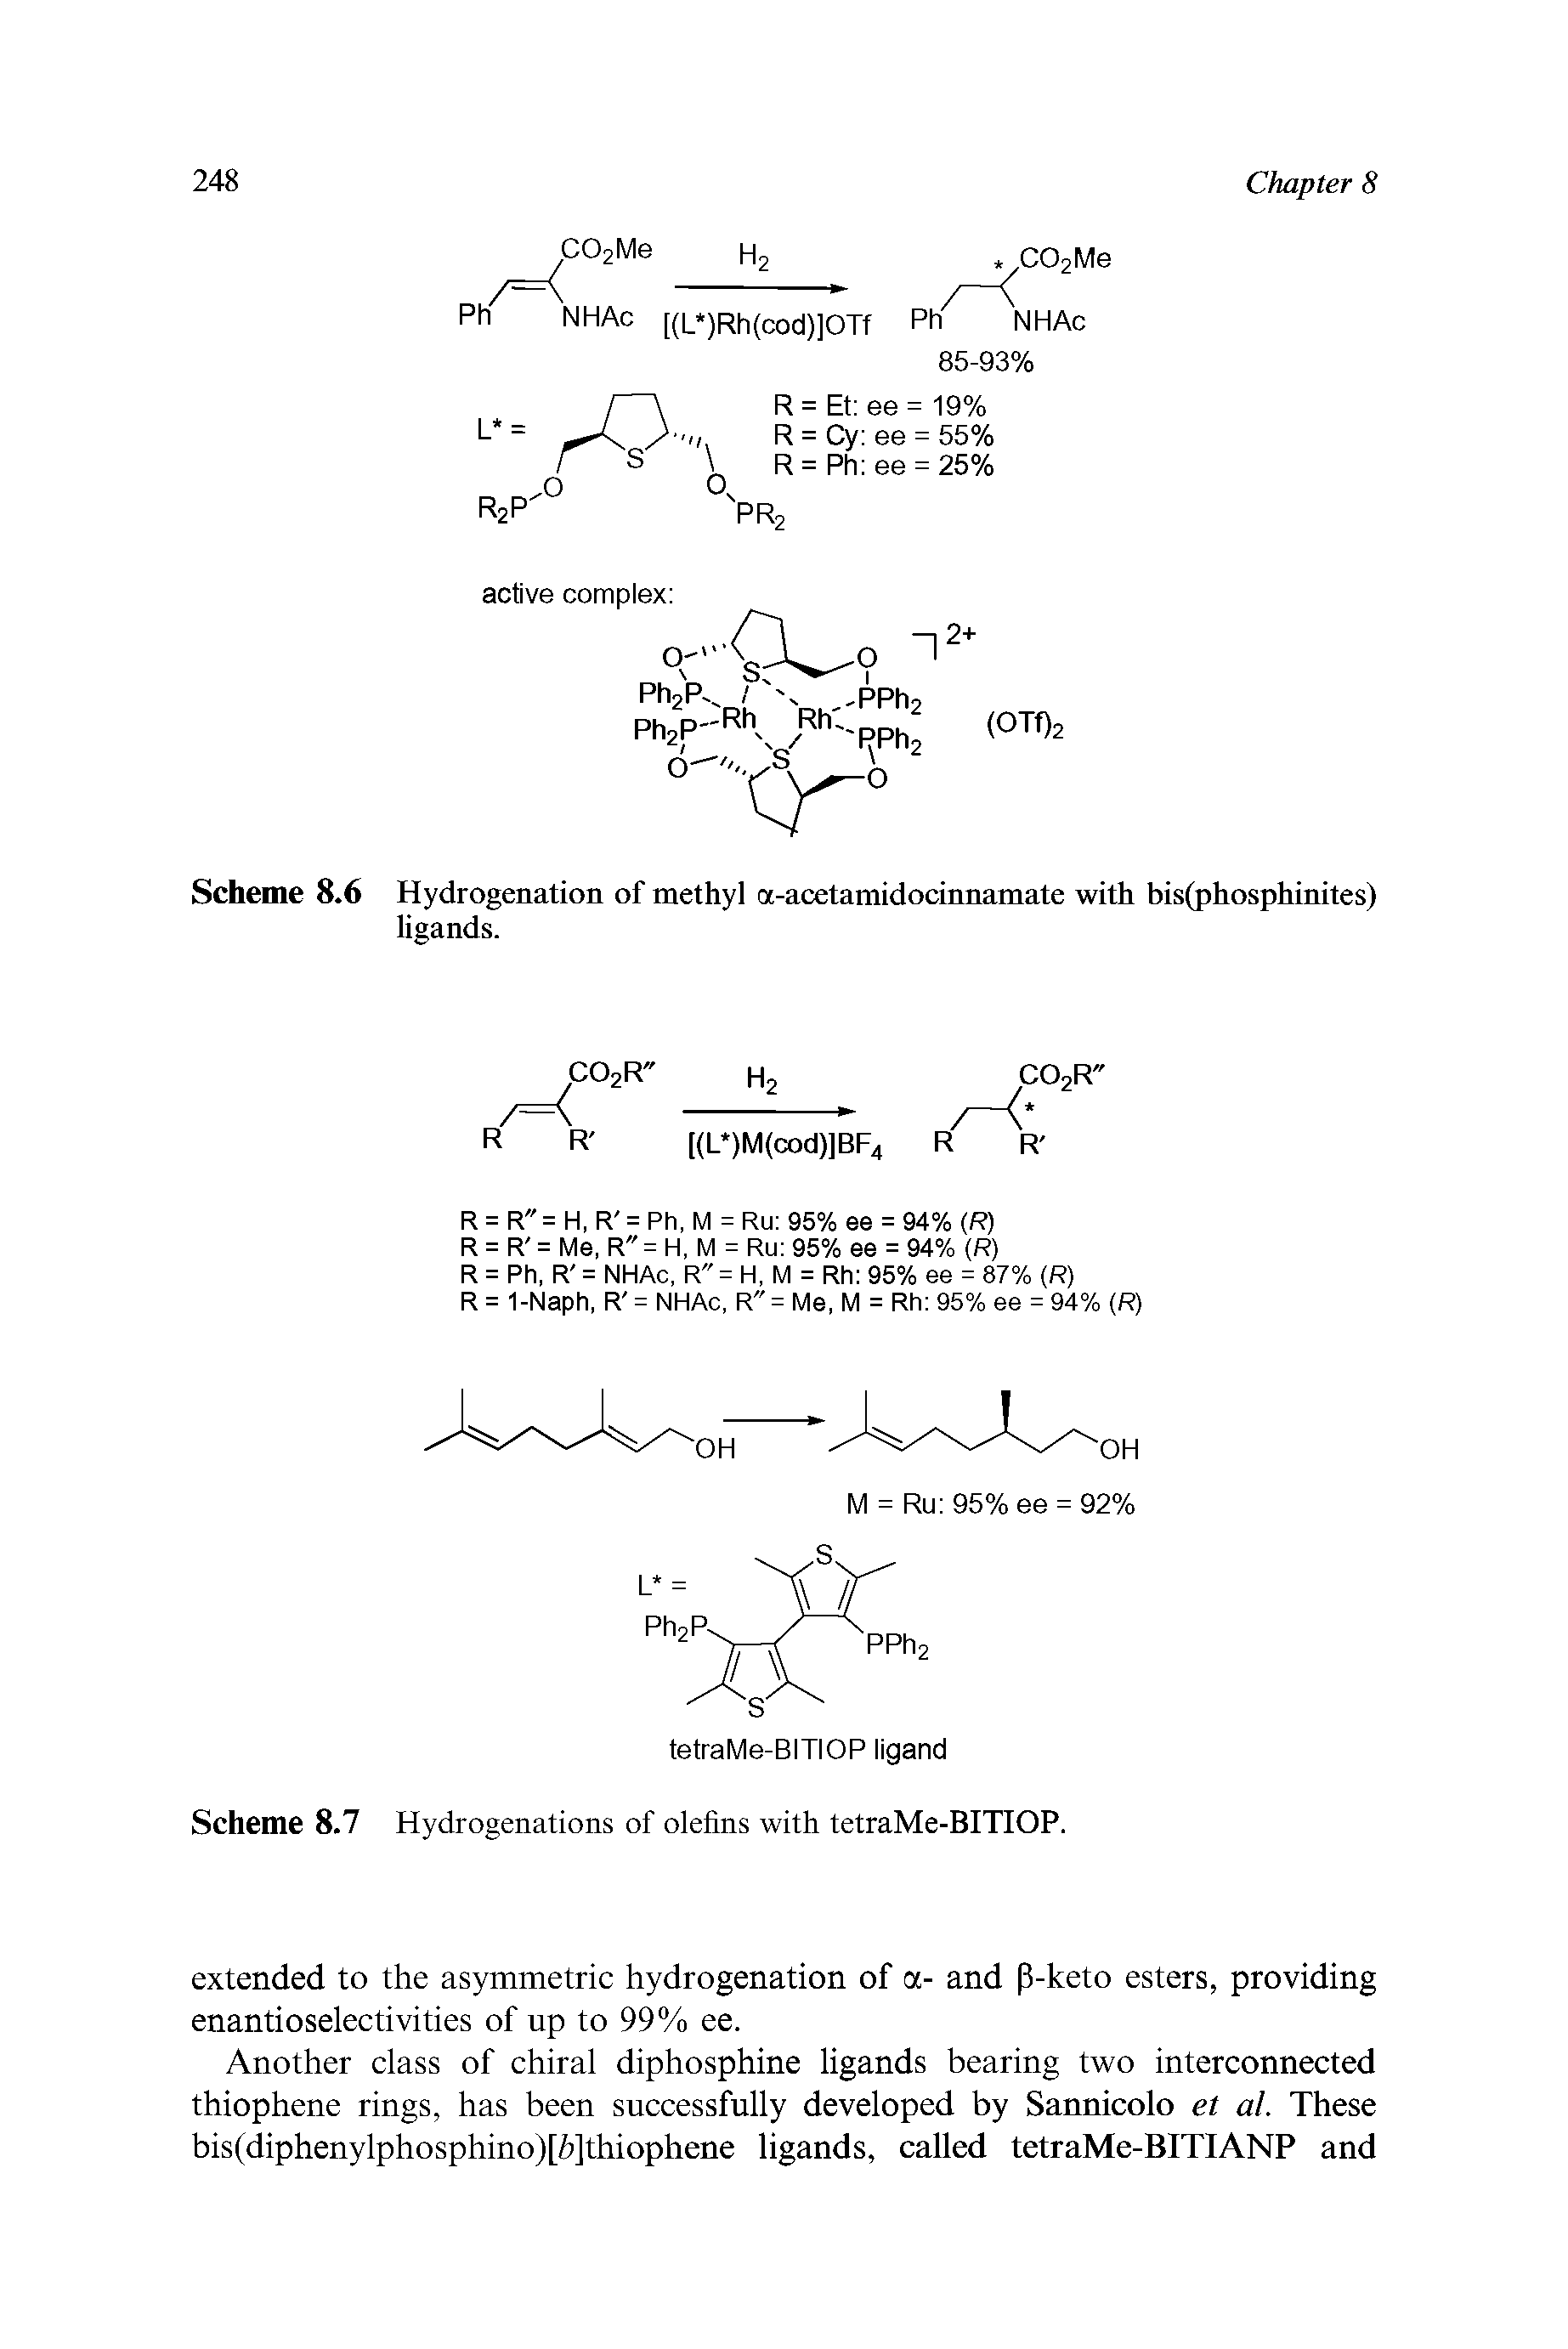 Scheme 8.7 Hydrogenations of olefins with tetraMe-BITIOP.